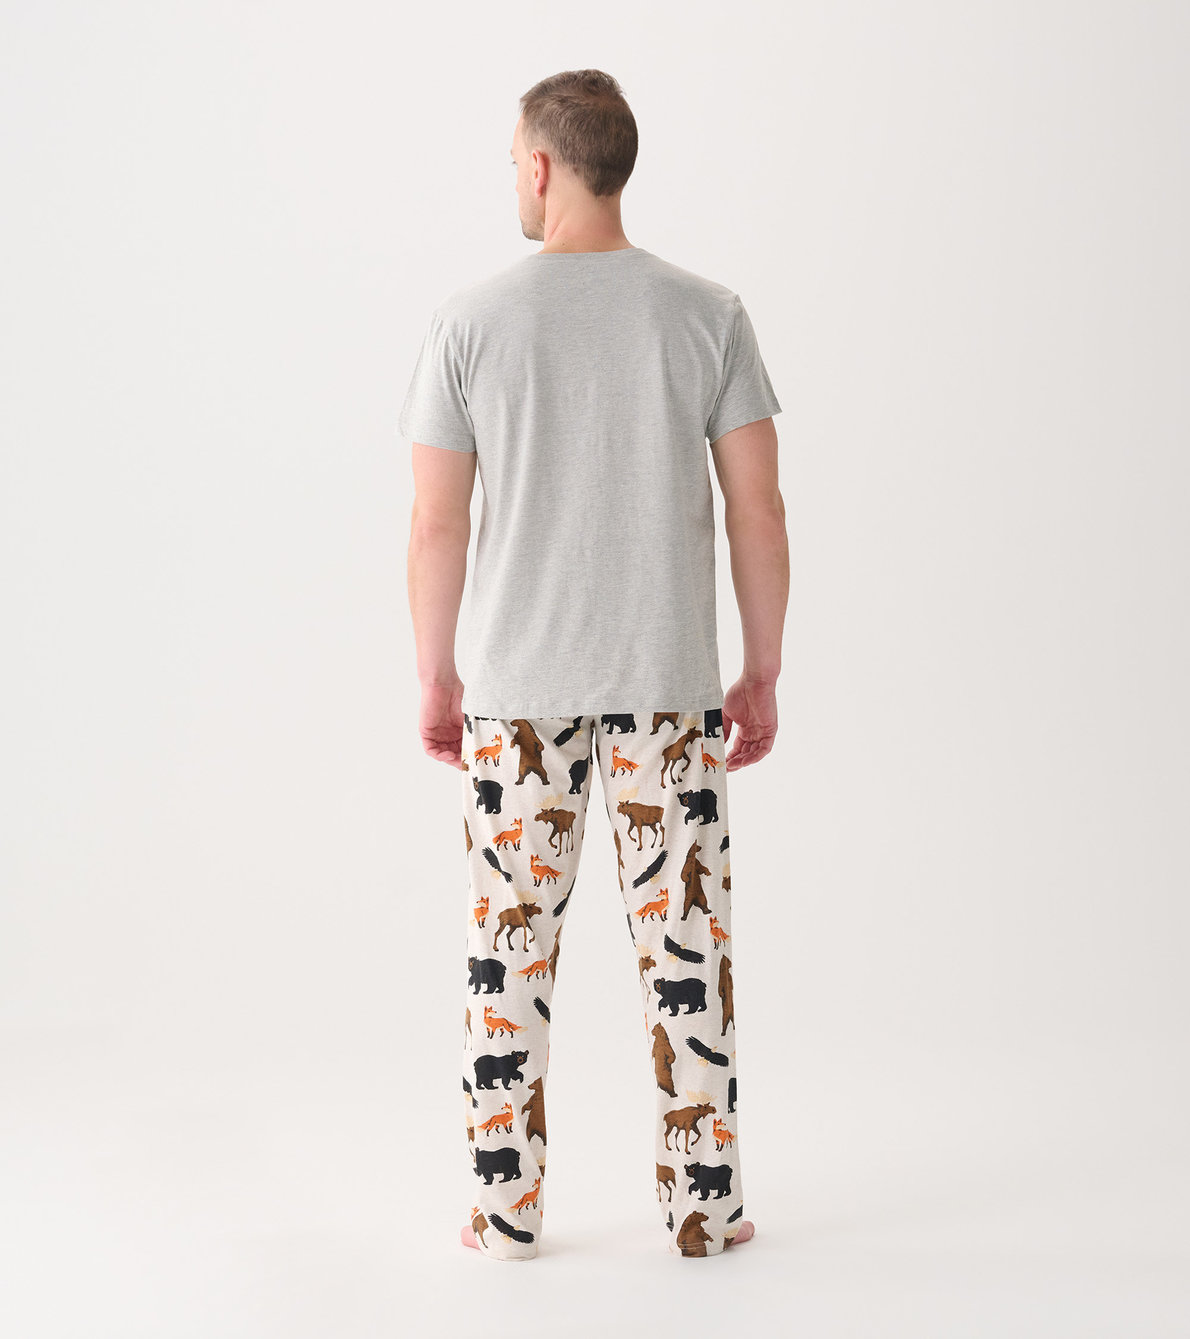 View larger image of Men's Wildlife T-Shirt and Pants Pajama Separates